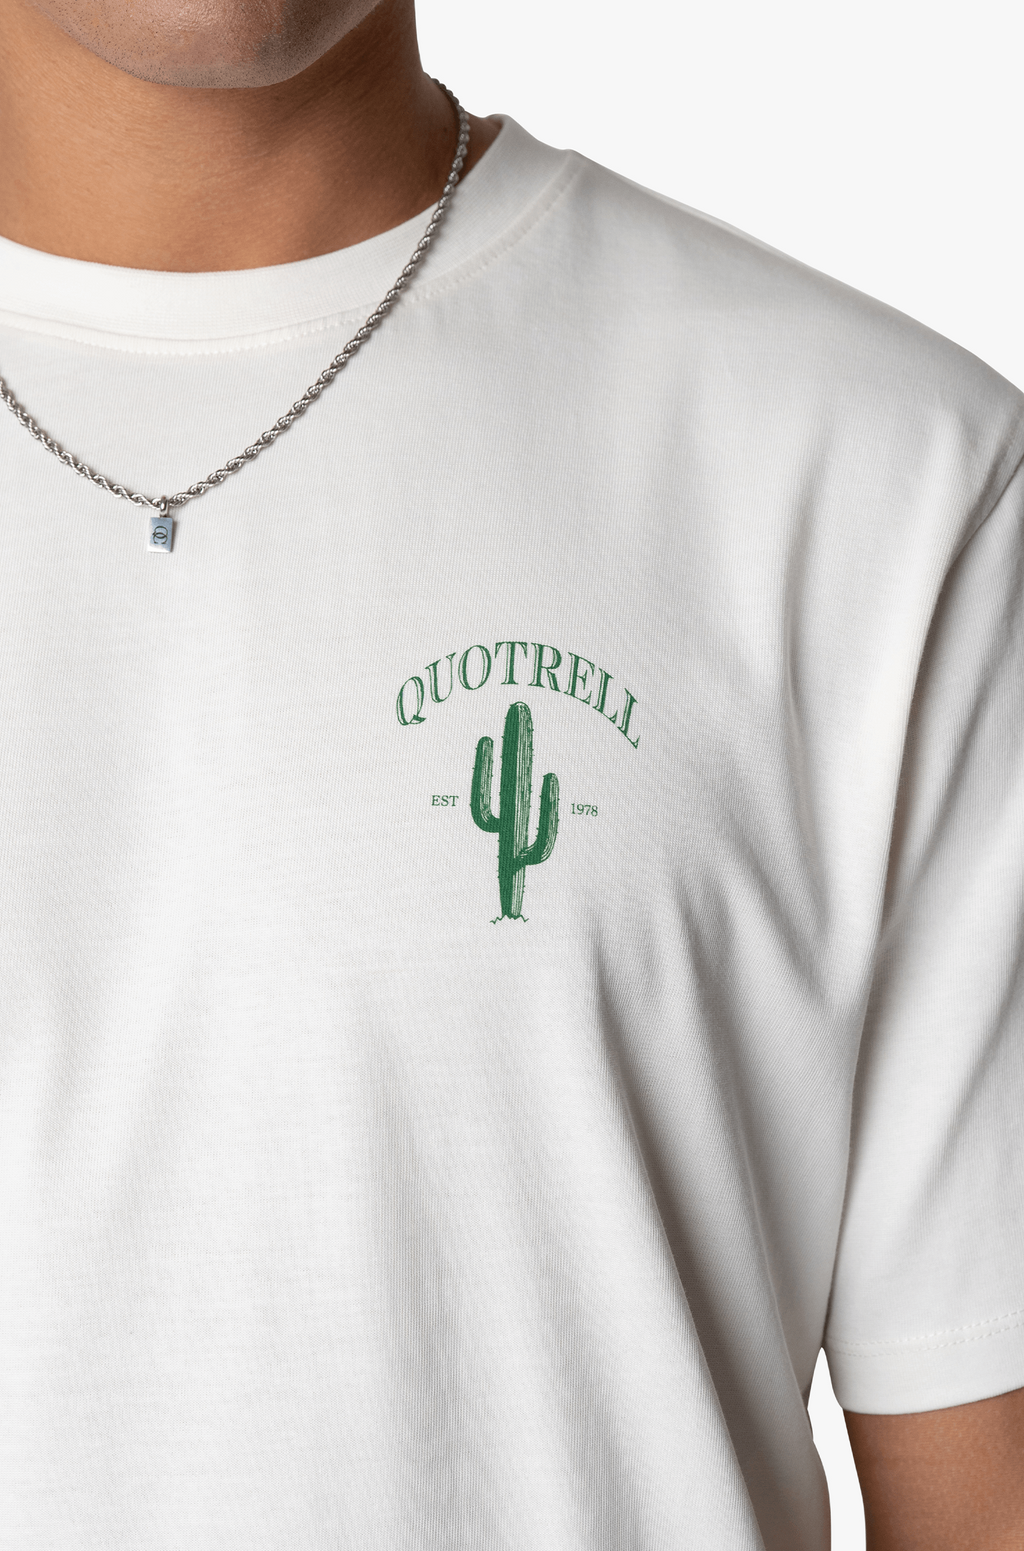 Quotrell Cactus T-shirt